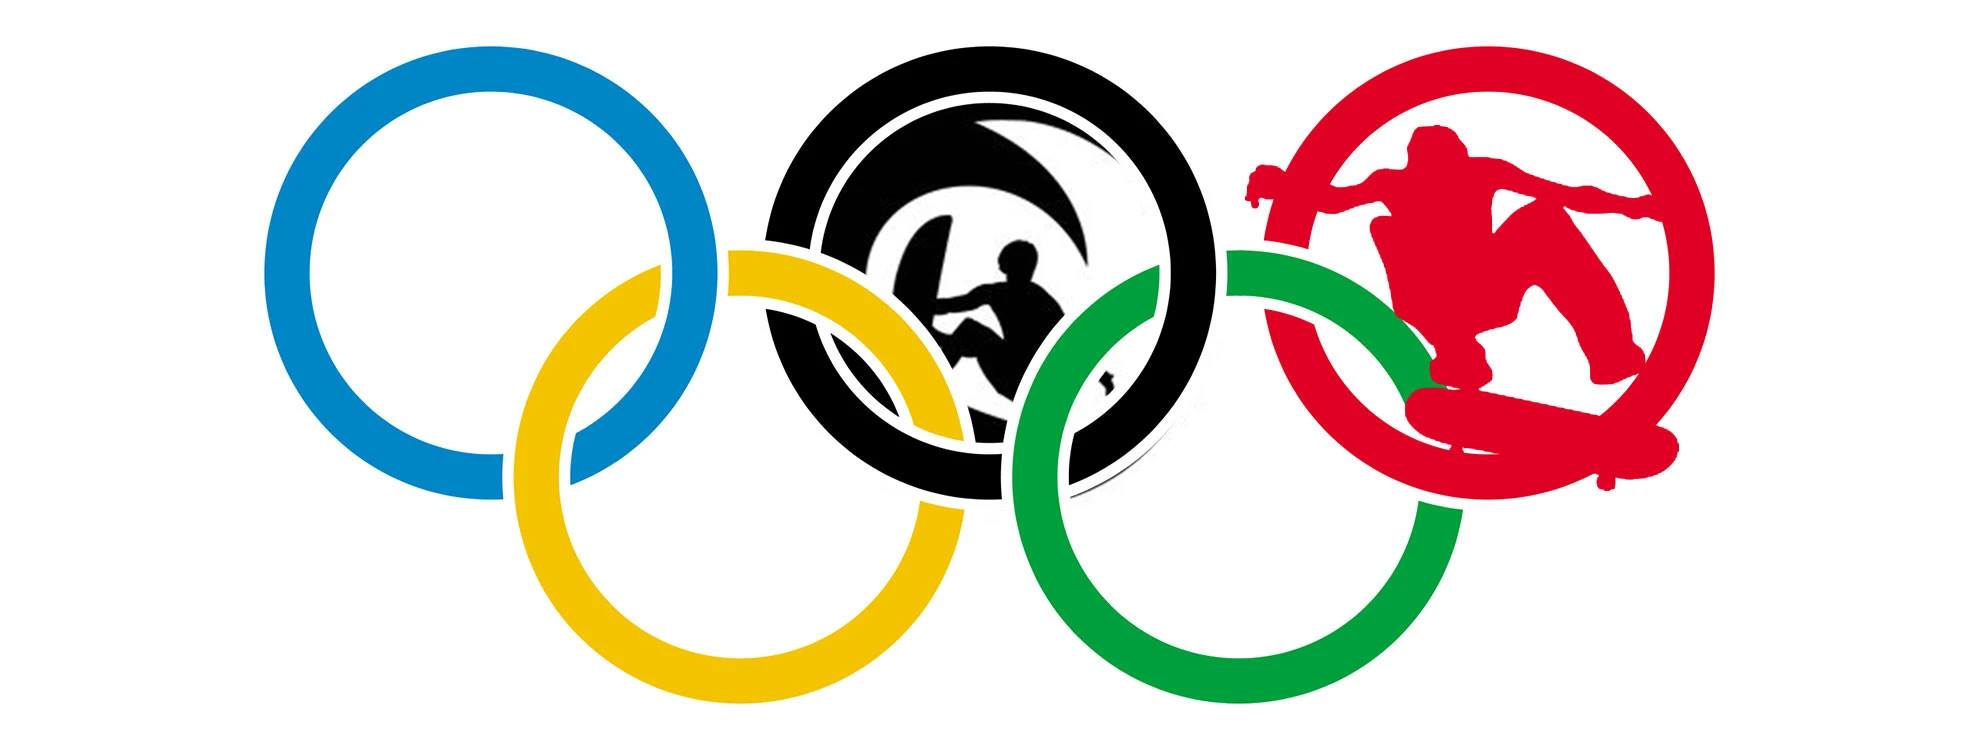 olimpiadi-skate